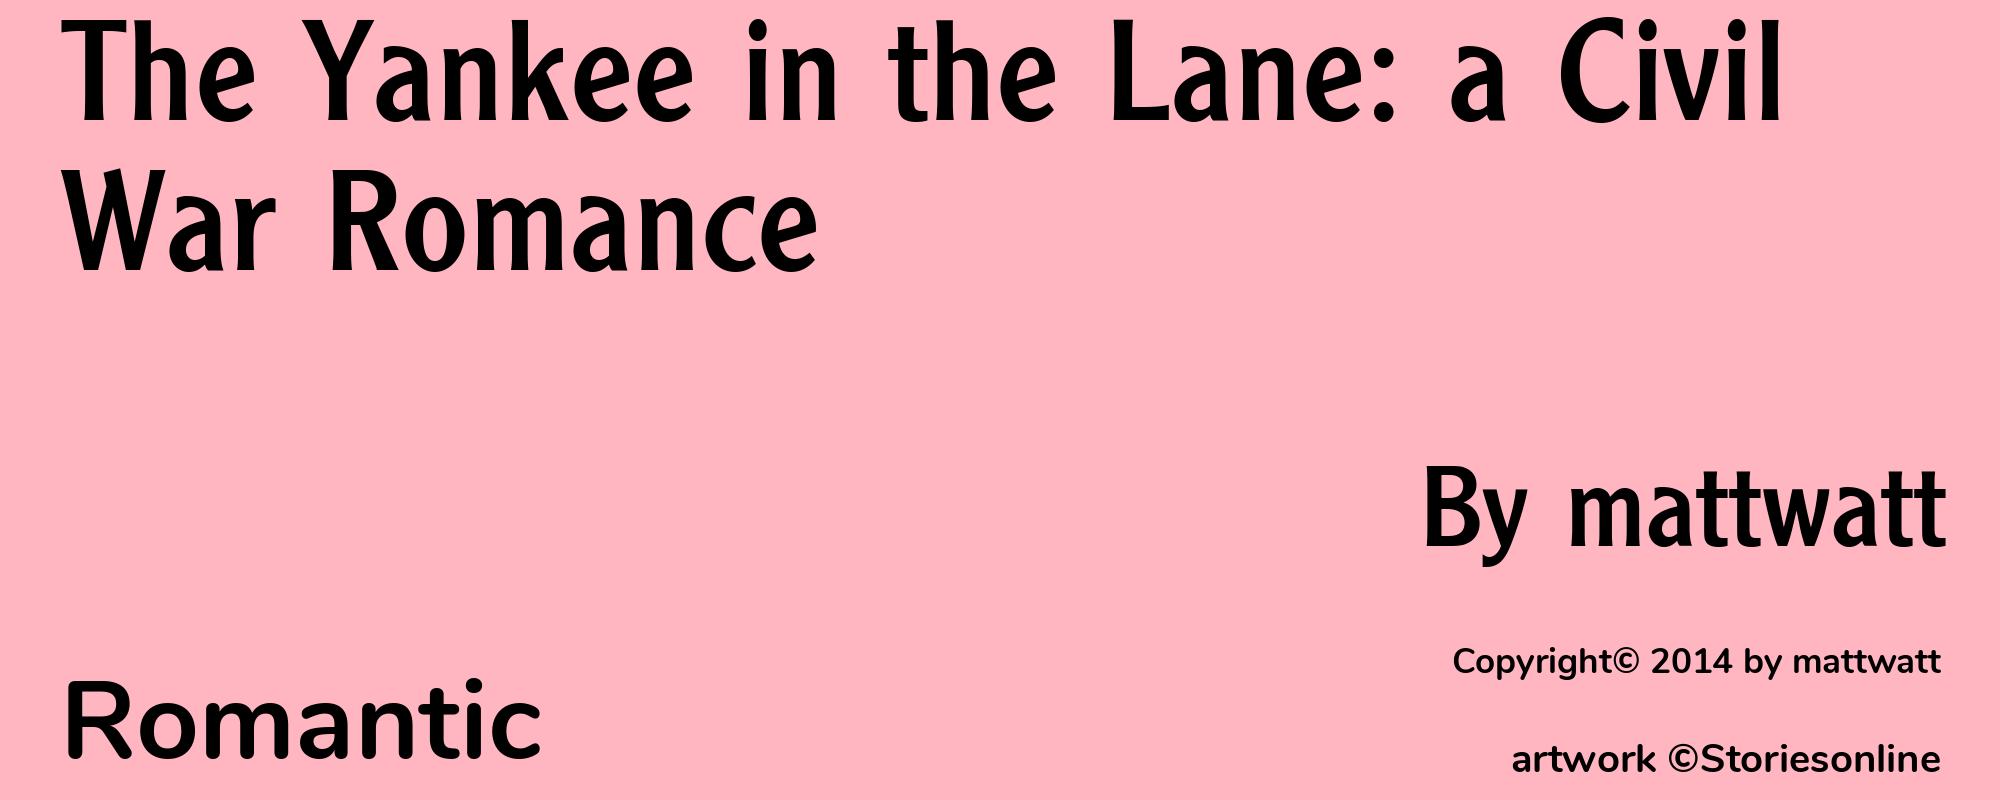 The Yankee in the Lane: a Civil War Romance - Cover